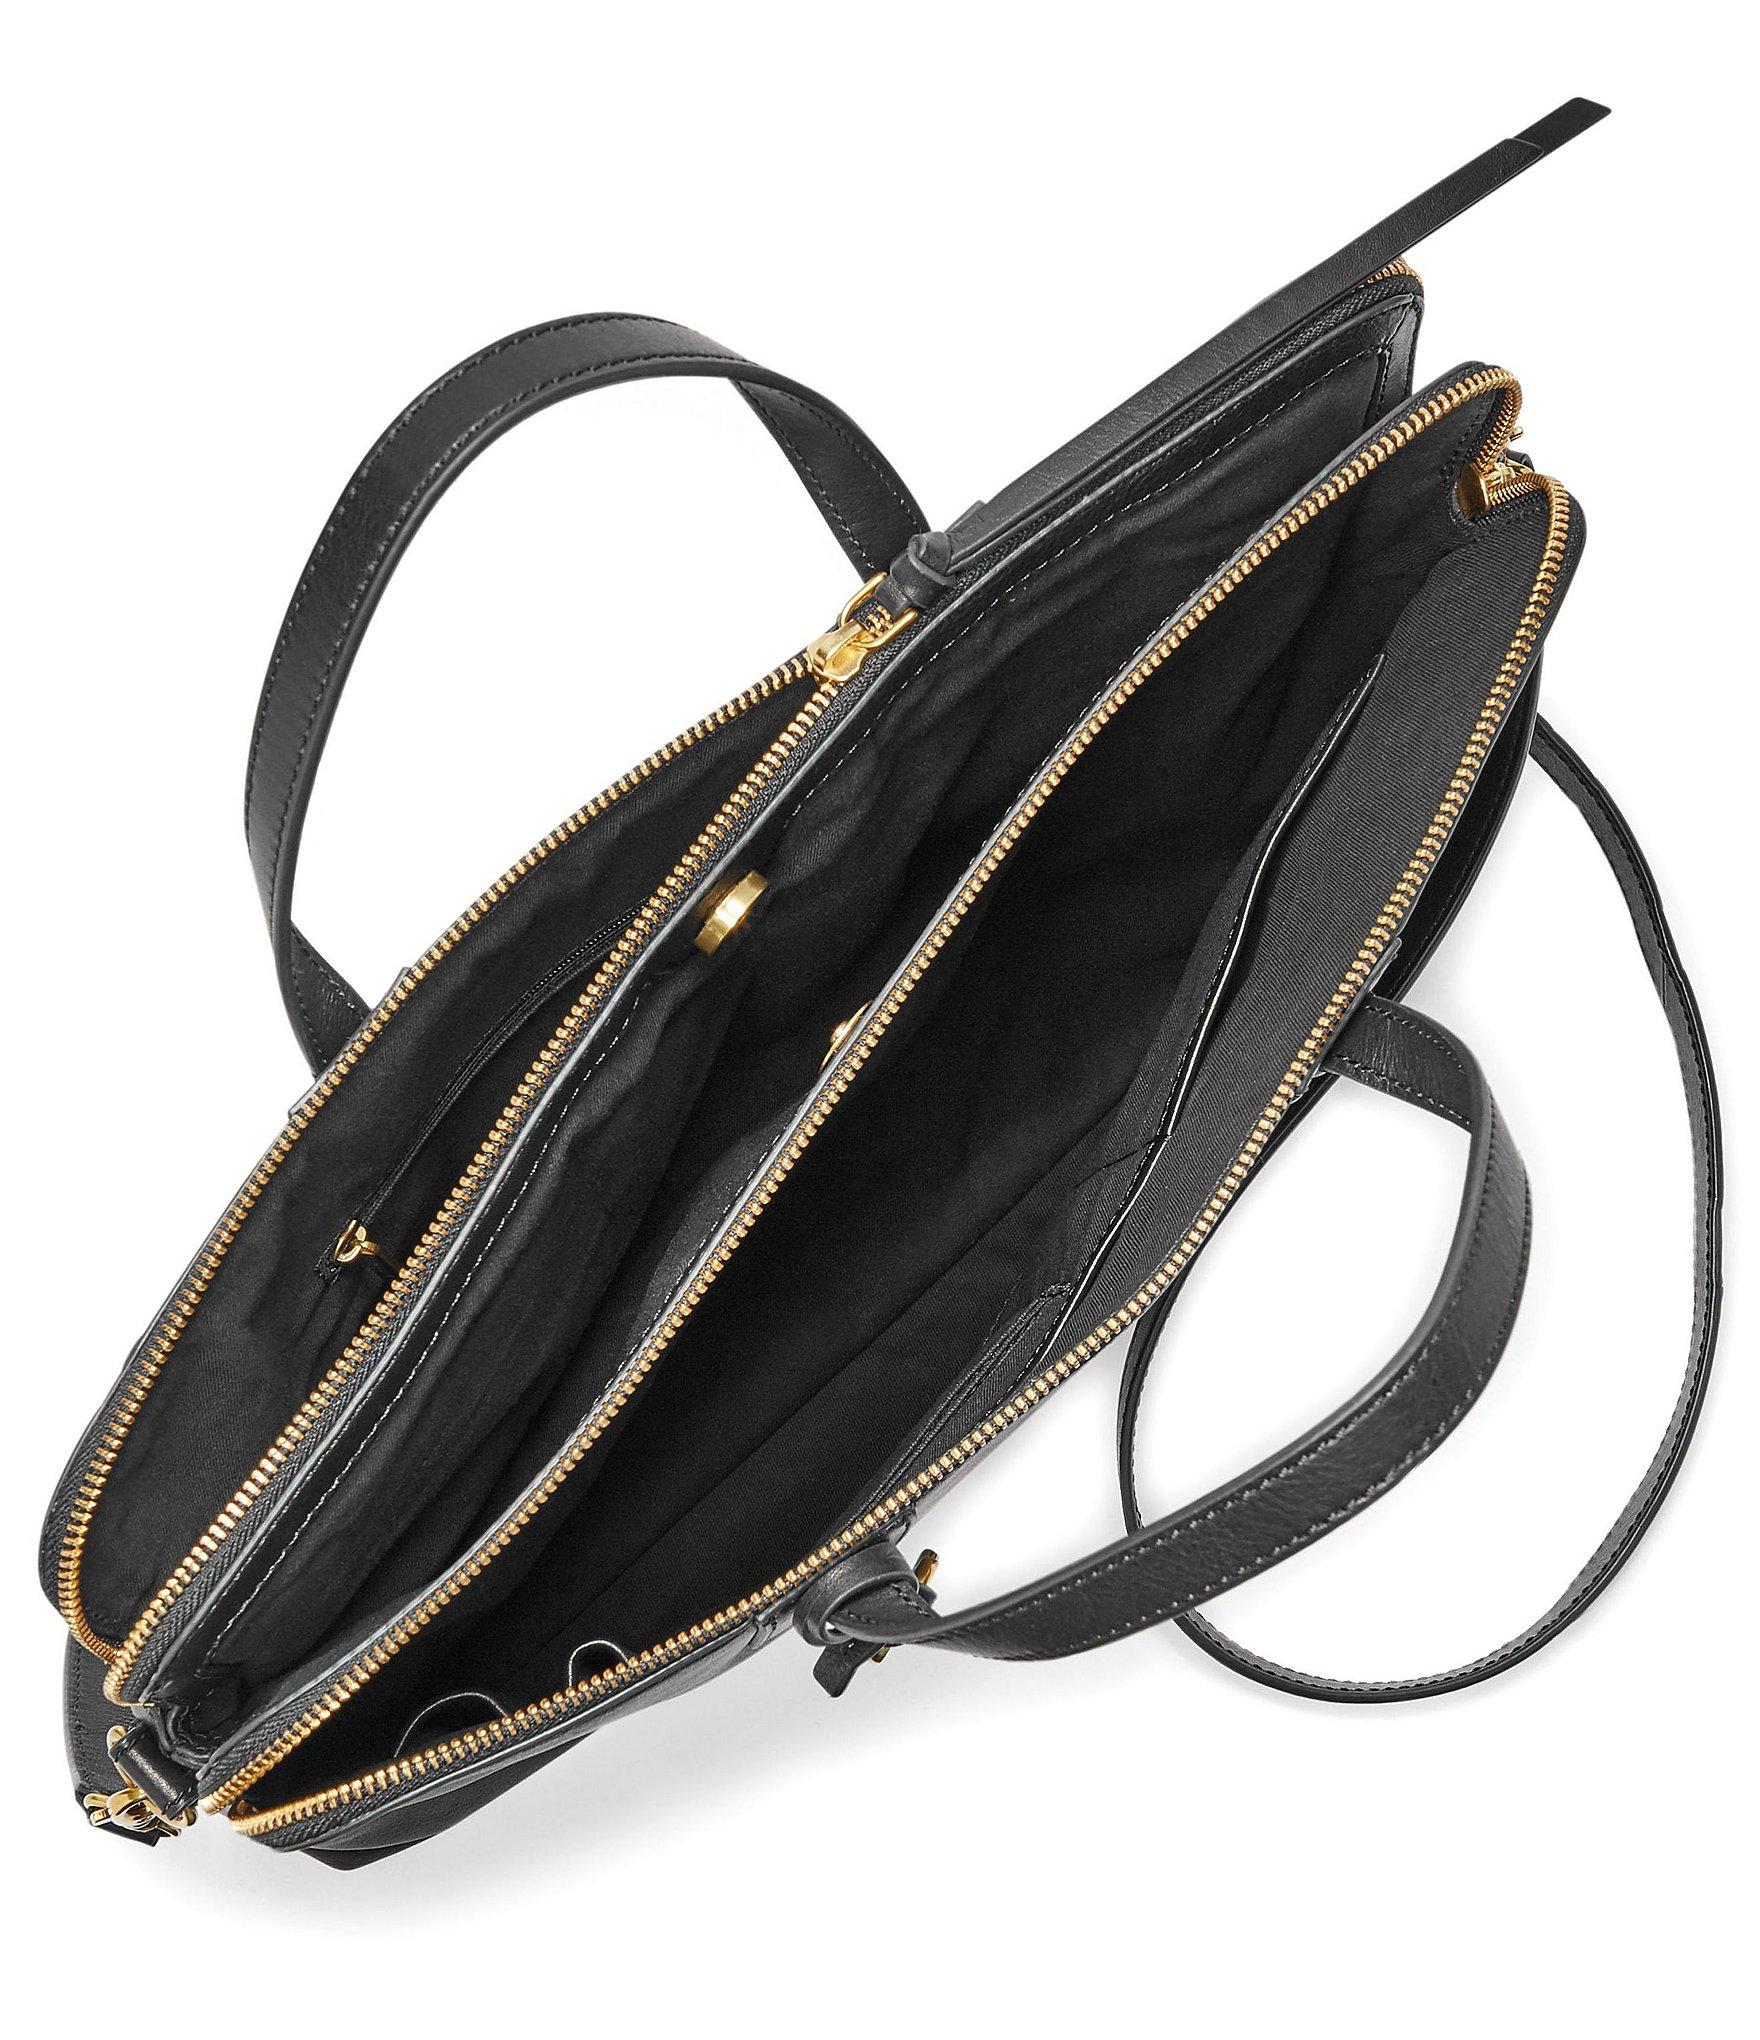 Lyst - Fossil Emma Laptop Bag in Black